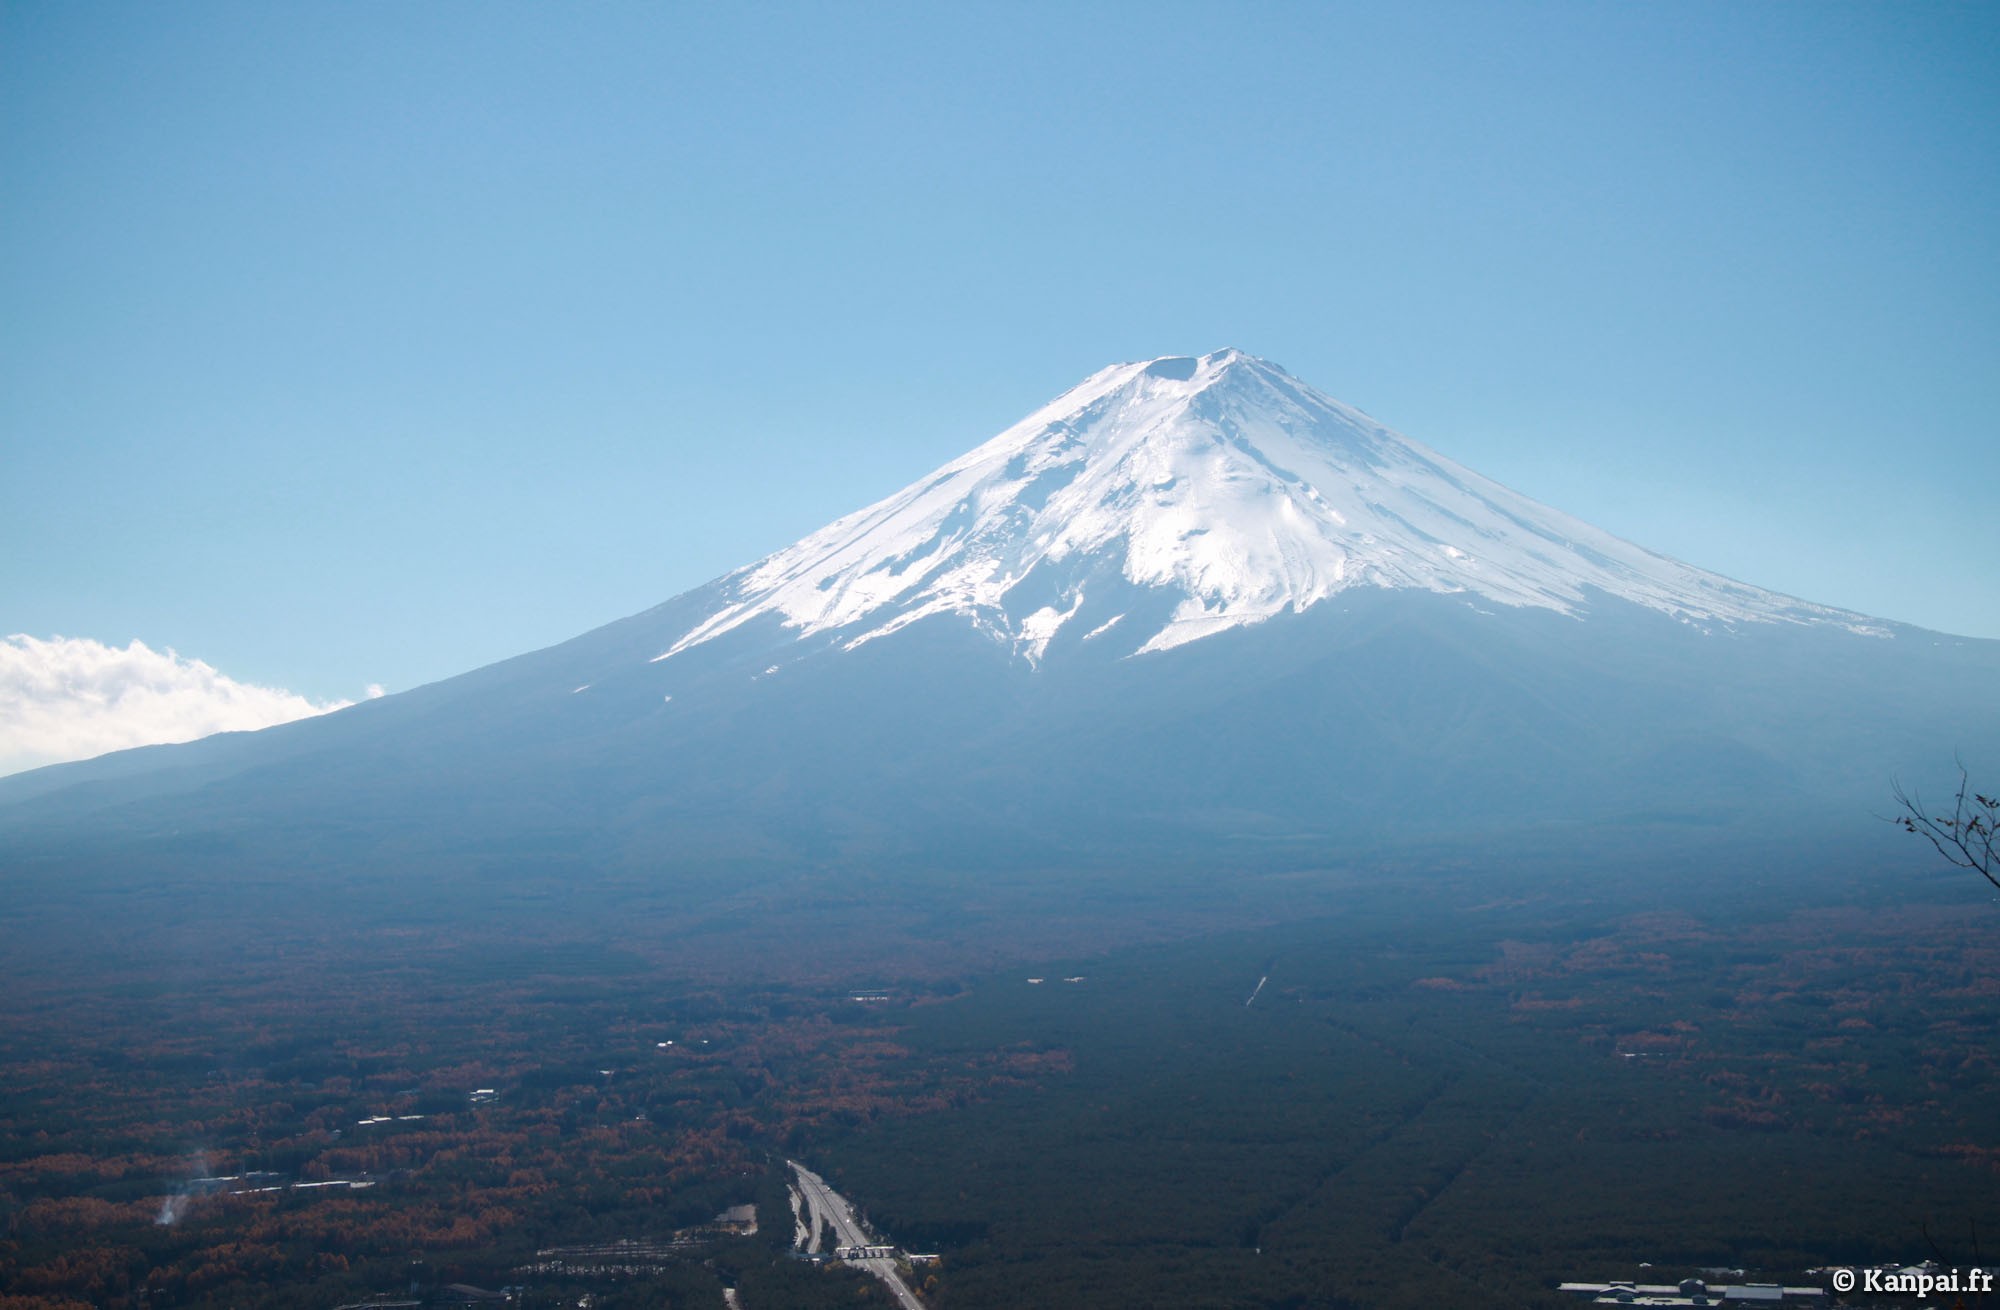  Mount  Fuji  The iconic volcano 